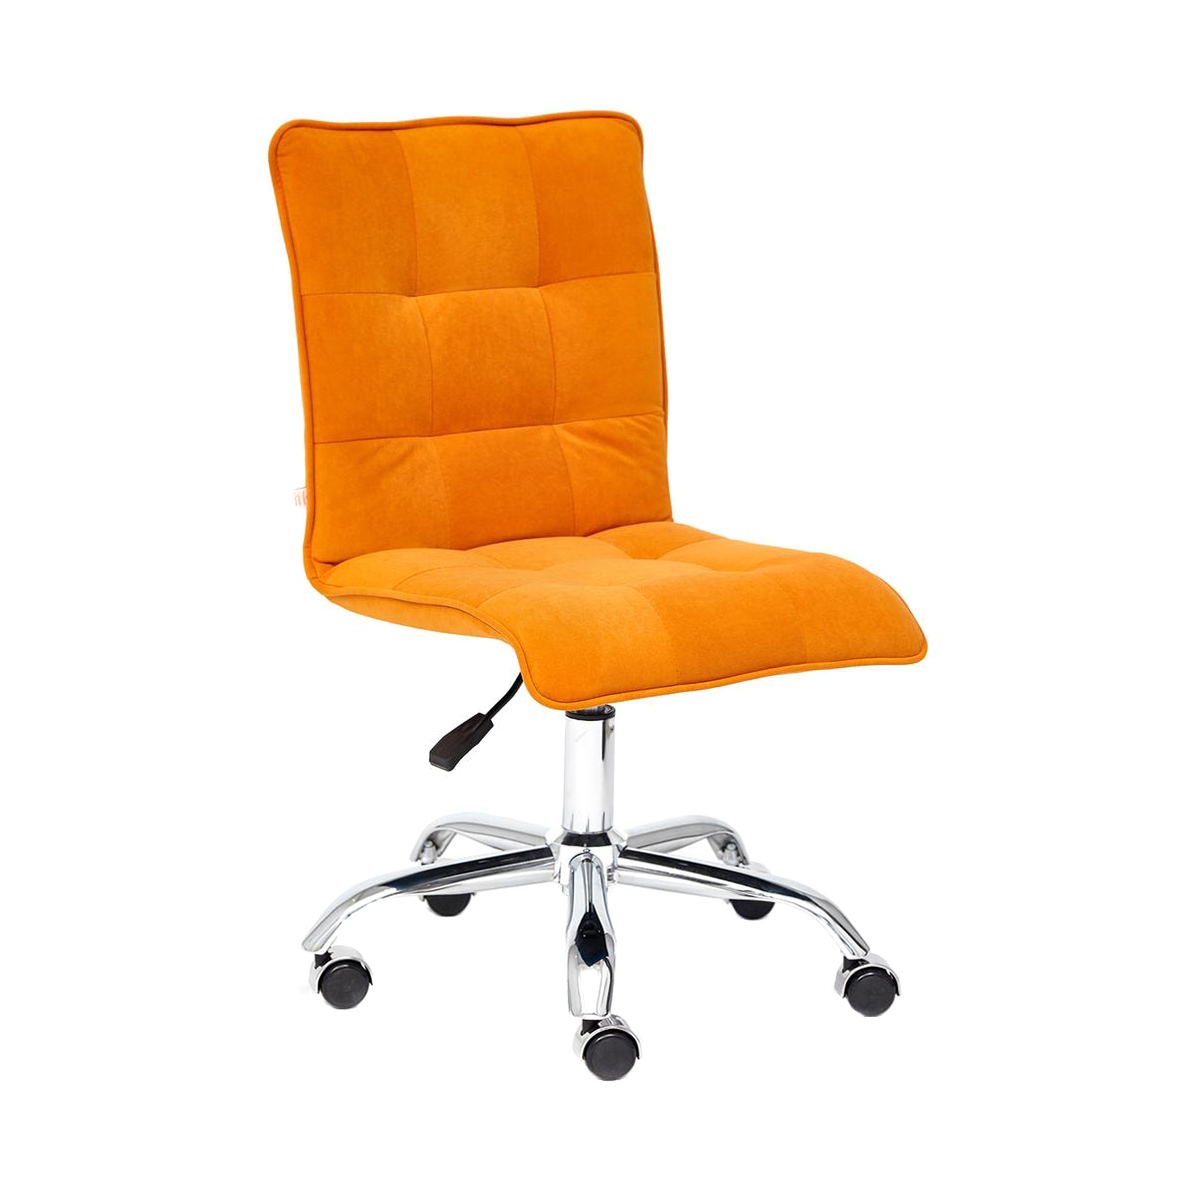 Кресло офисное TC до 100 кг 96х45х40 см оранжевый кресло офисное tc до 100 кг 96х45х40 см